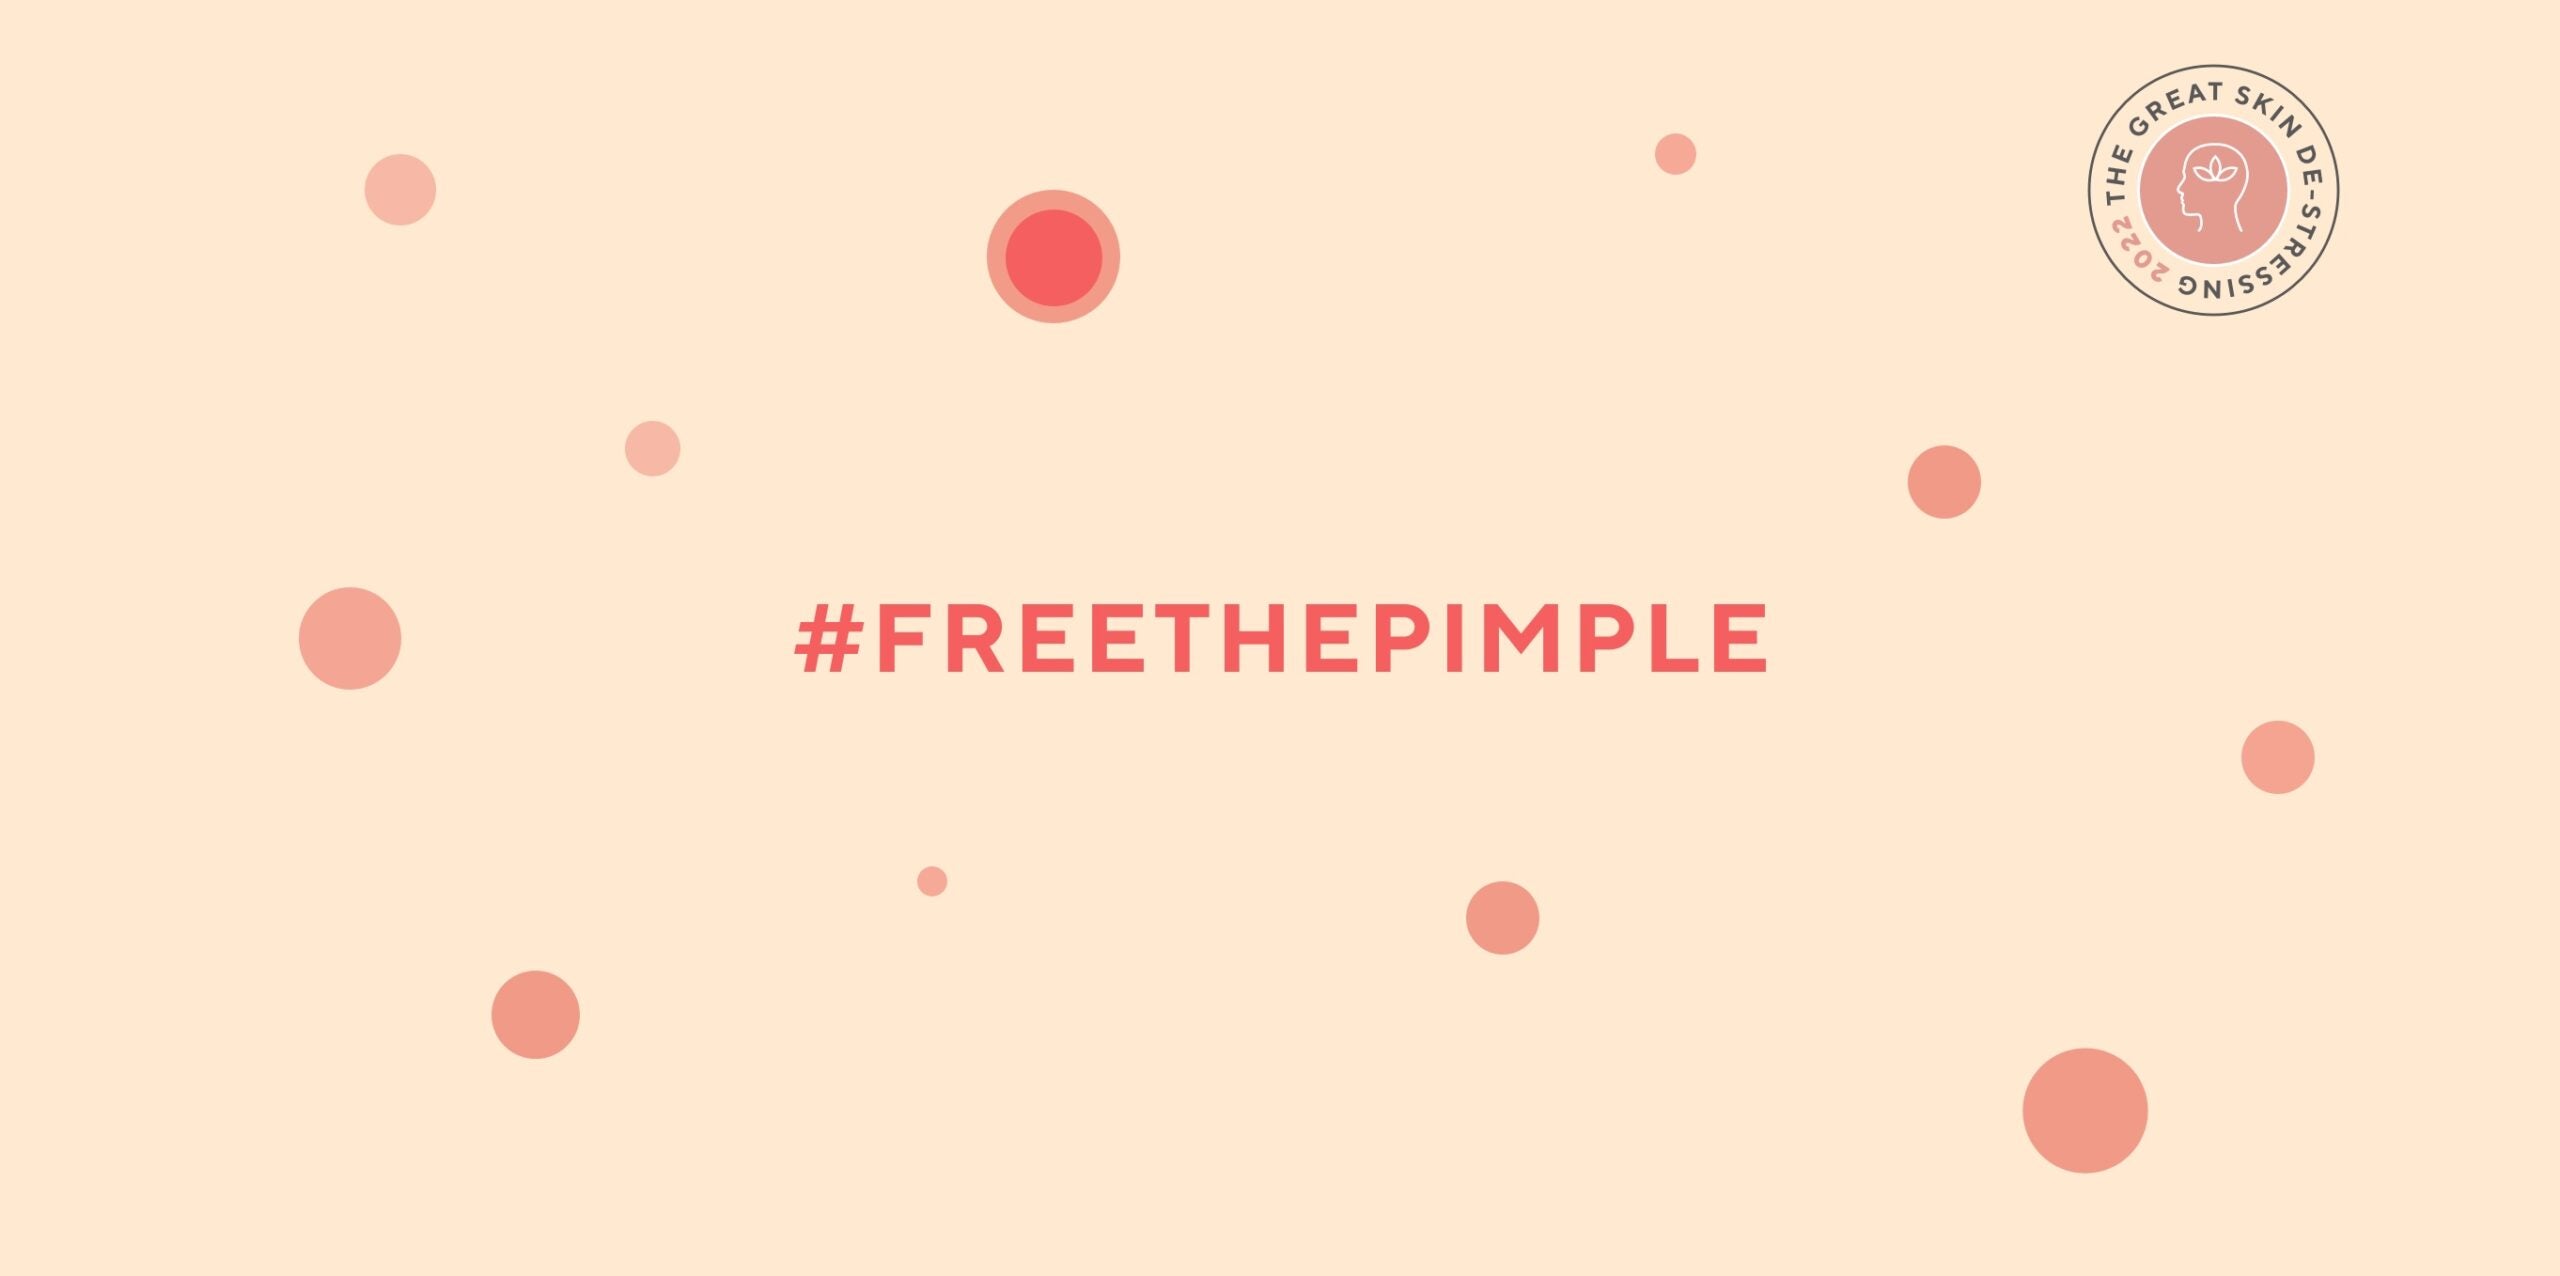 Image #freethepimple movement